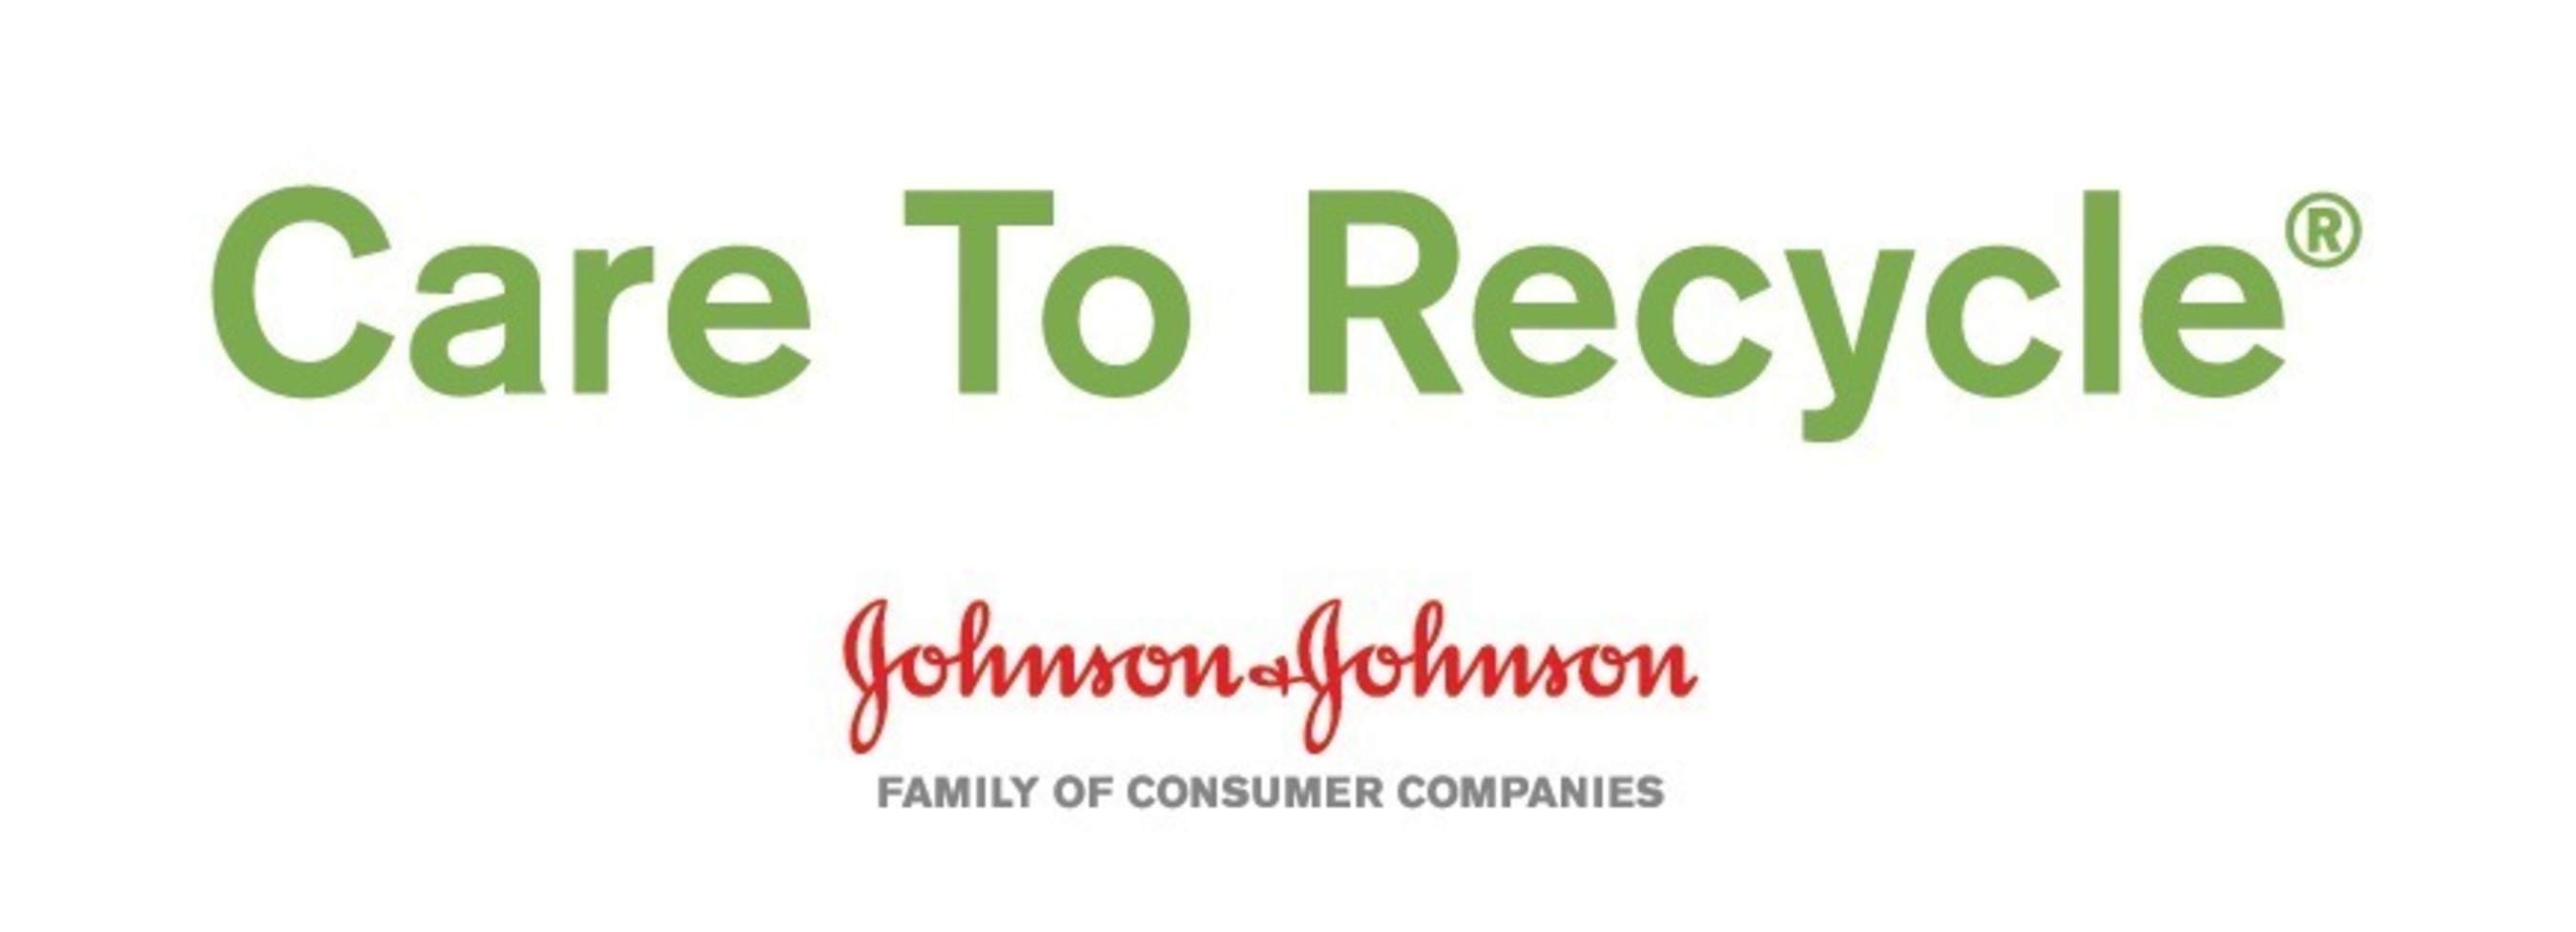 Johnson & Johnson Family of Consumer Companies Care To Recycle Program (PRNewsFoto/Cone Communications)